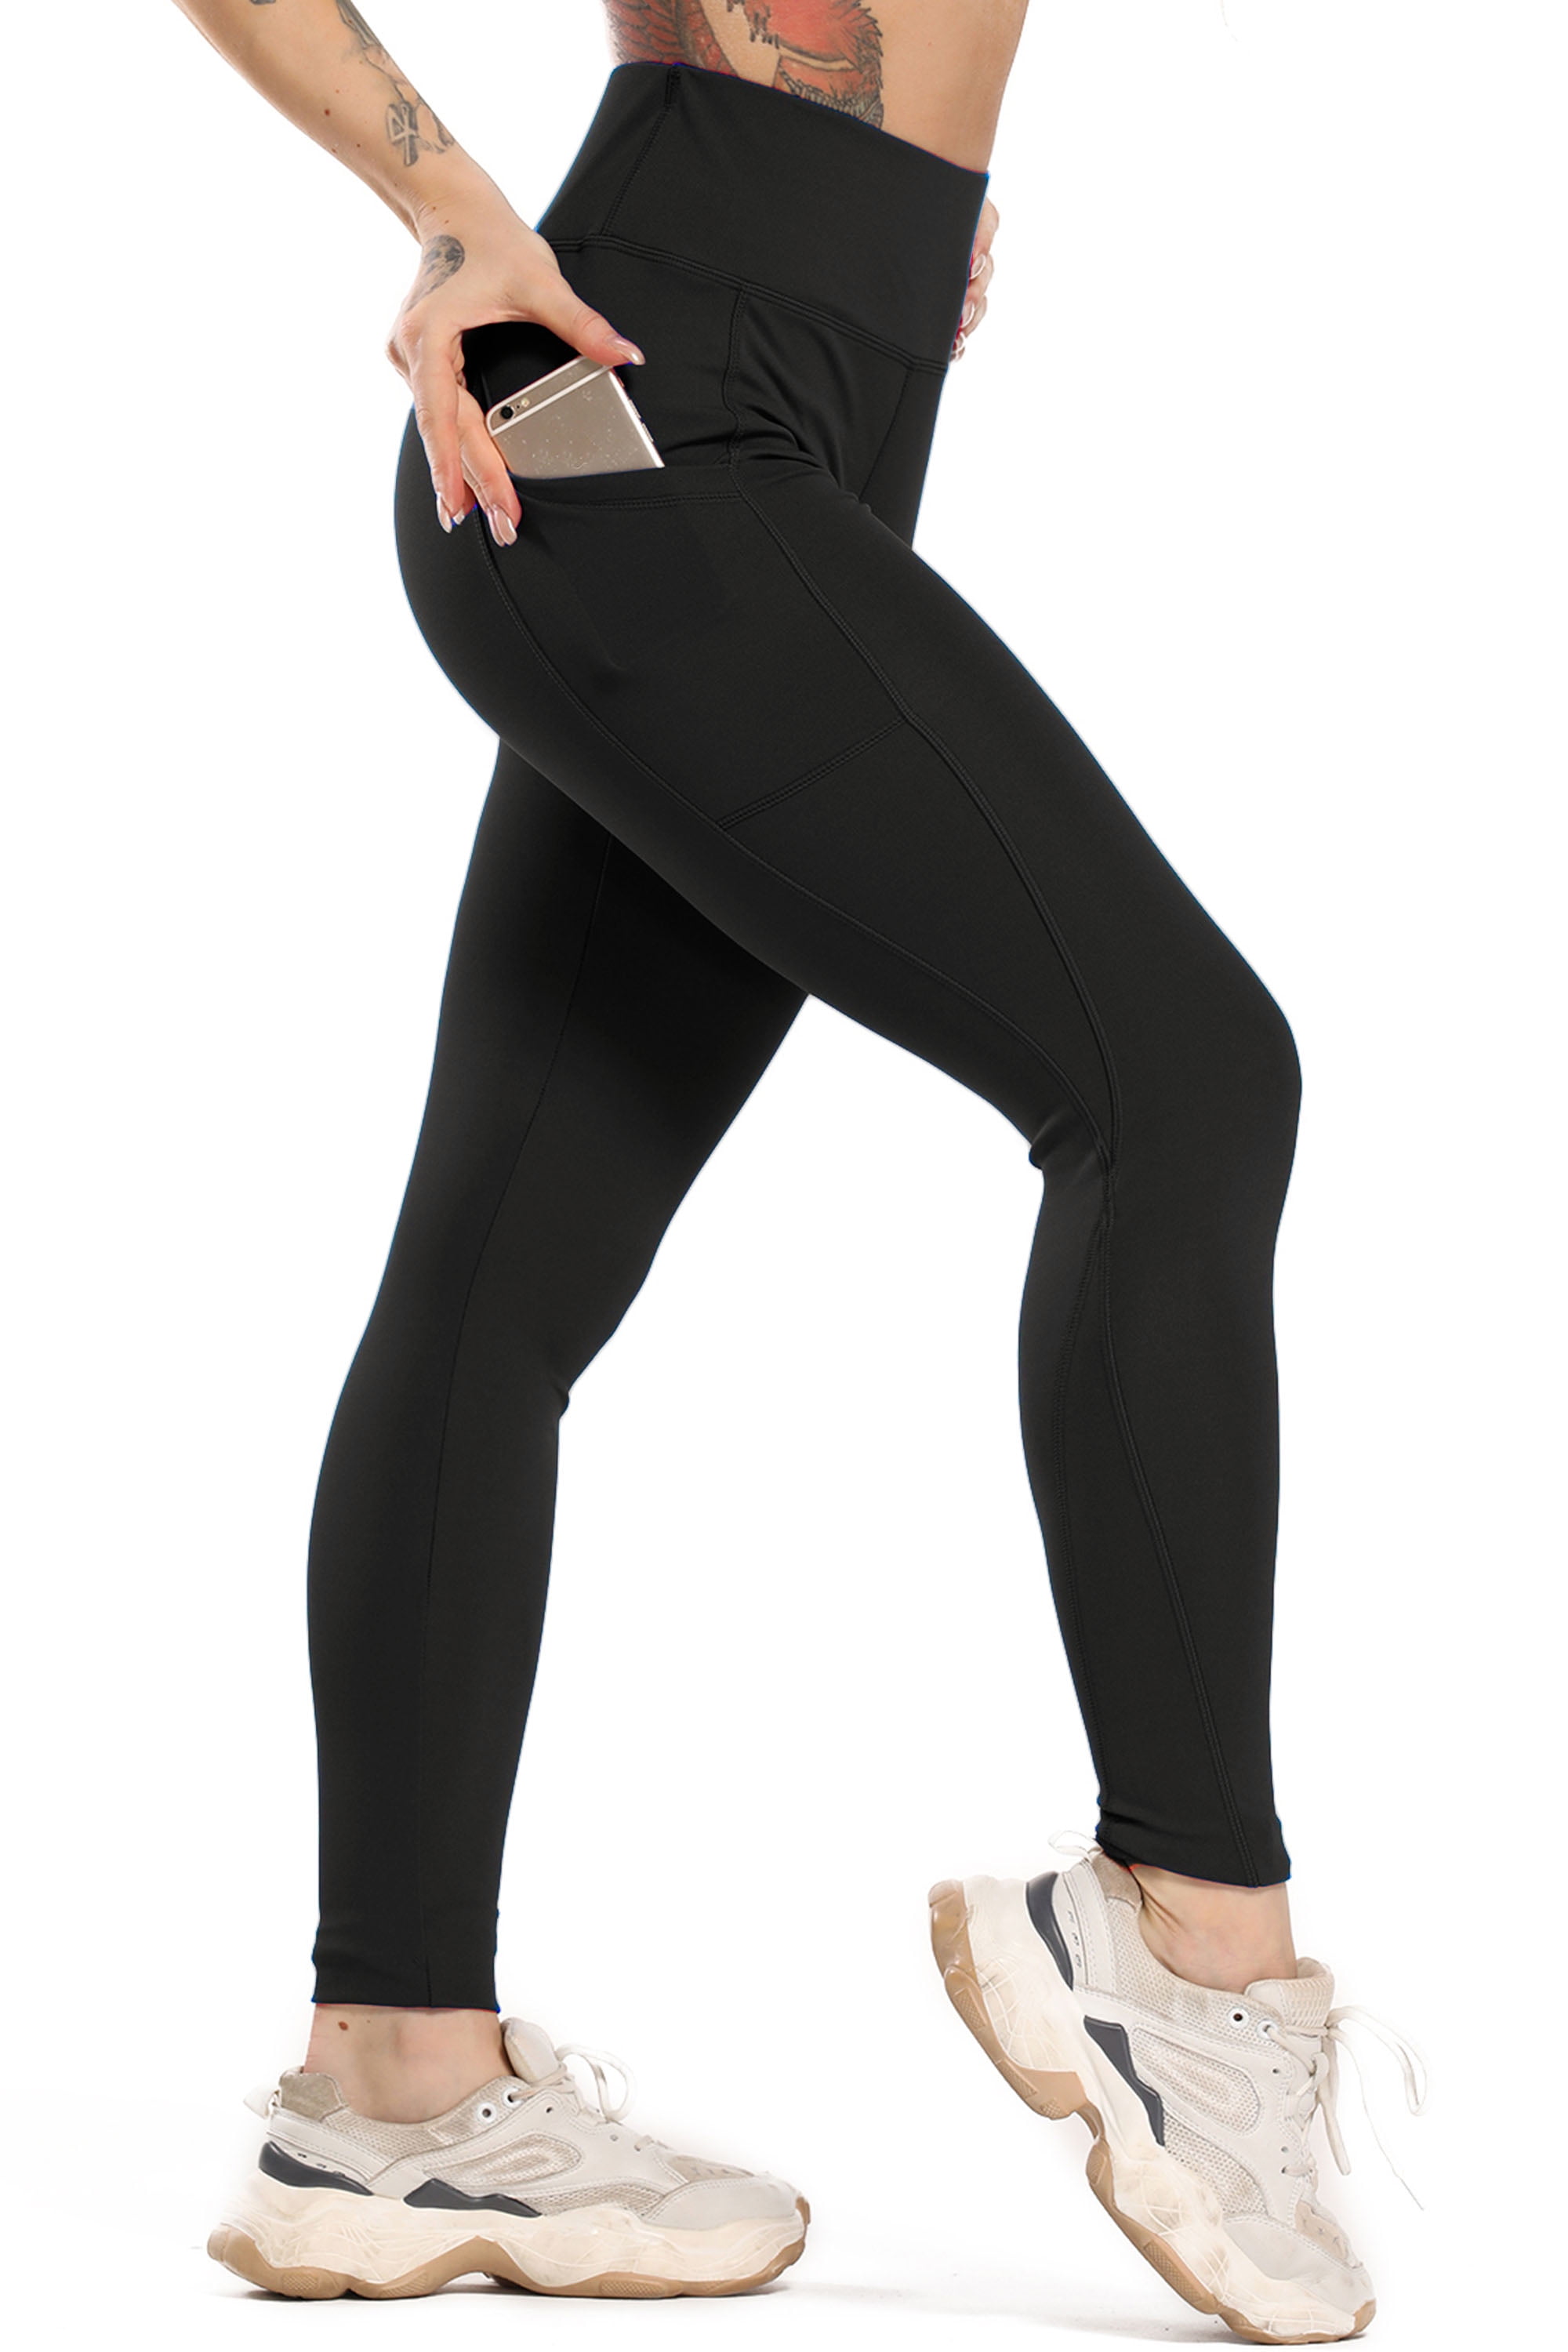 Women Slim Yoga Pants Casual High Waist Pocket Tummy Control Stretch Leggings GI